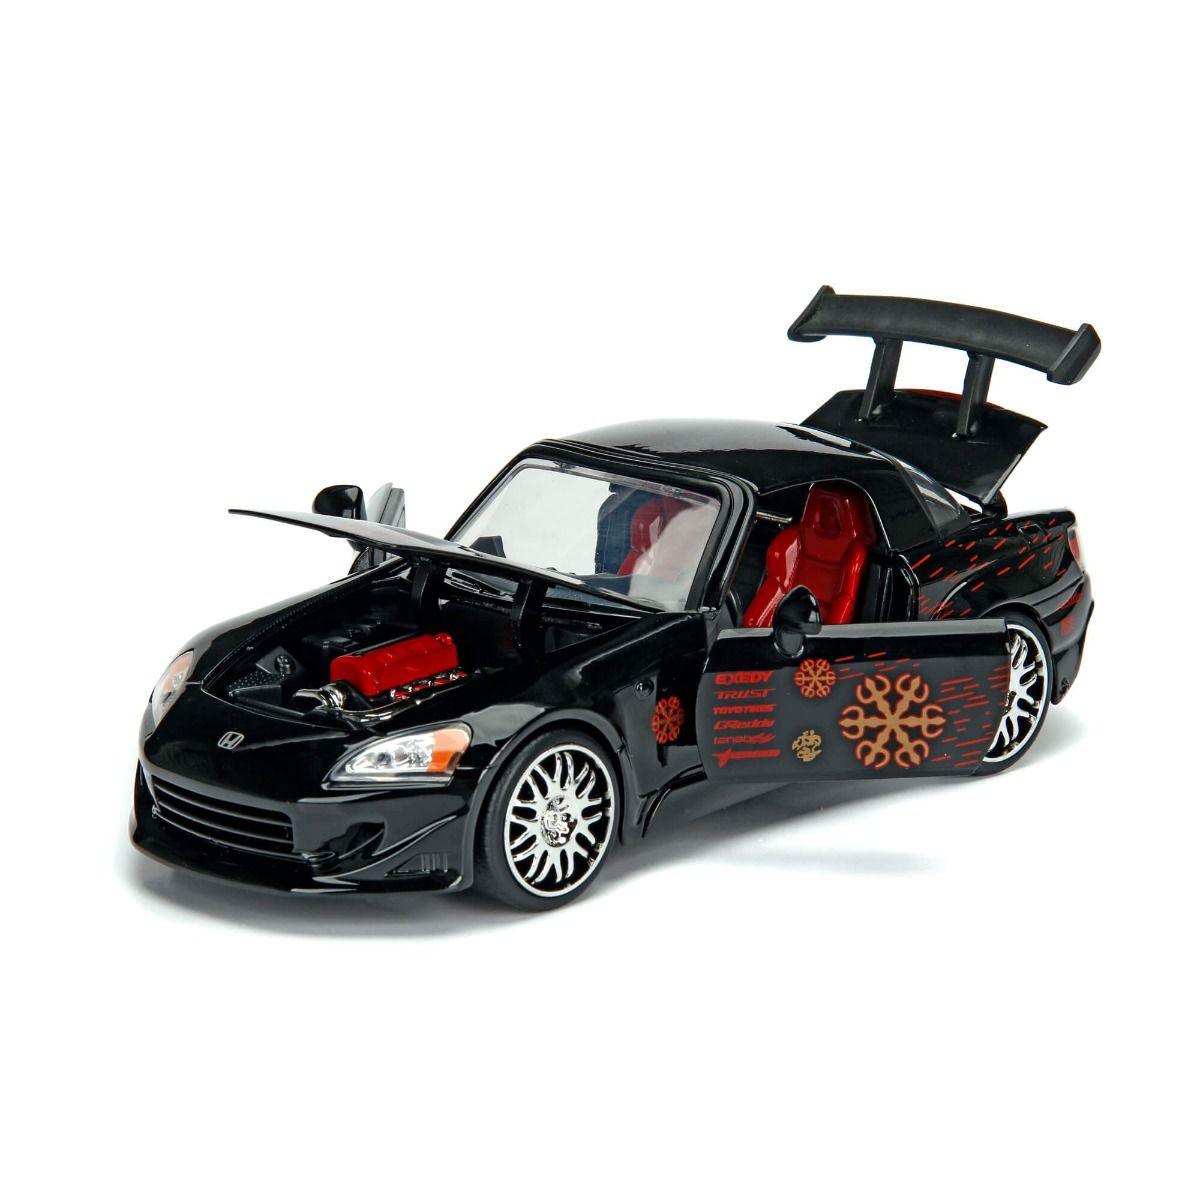 JAD99541 Fast and Furious - Johnny's Honda S2000 1:24 Scale Hollywood Ride - Jada Toys - Titan Pop Culture